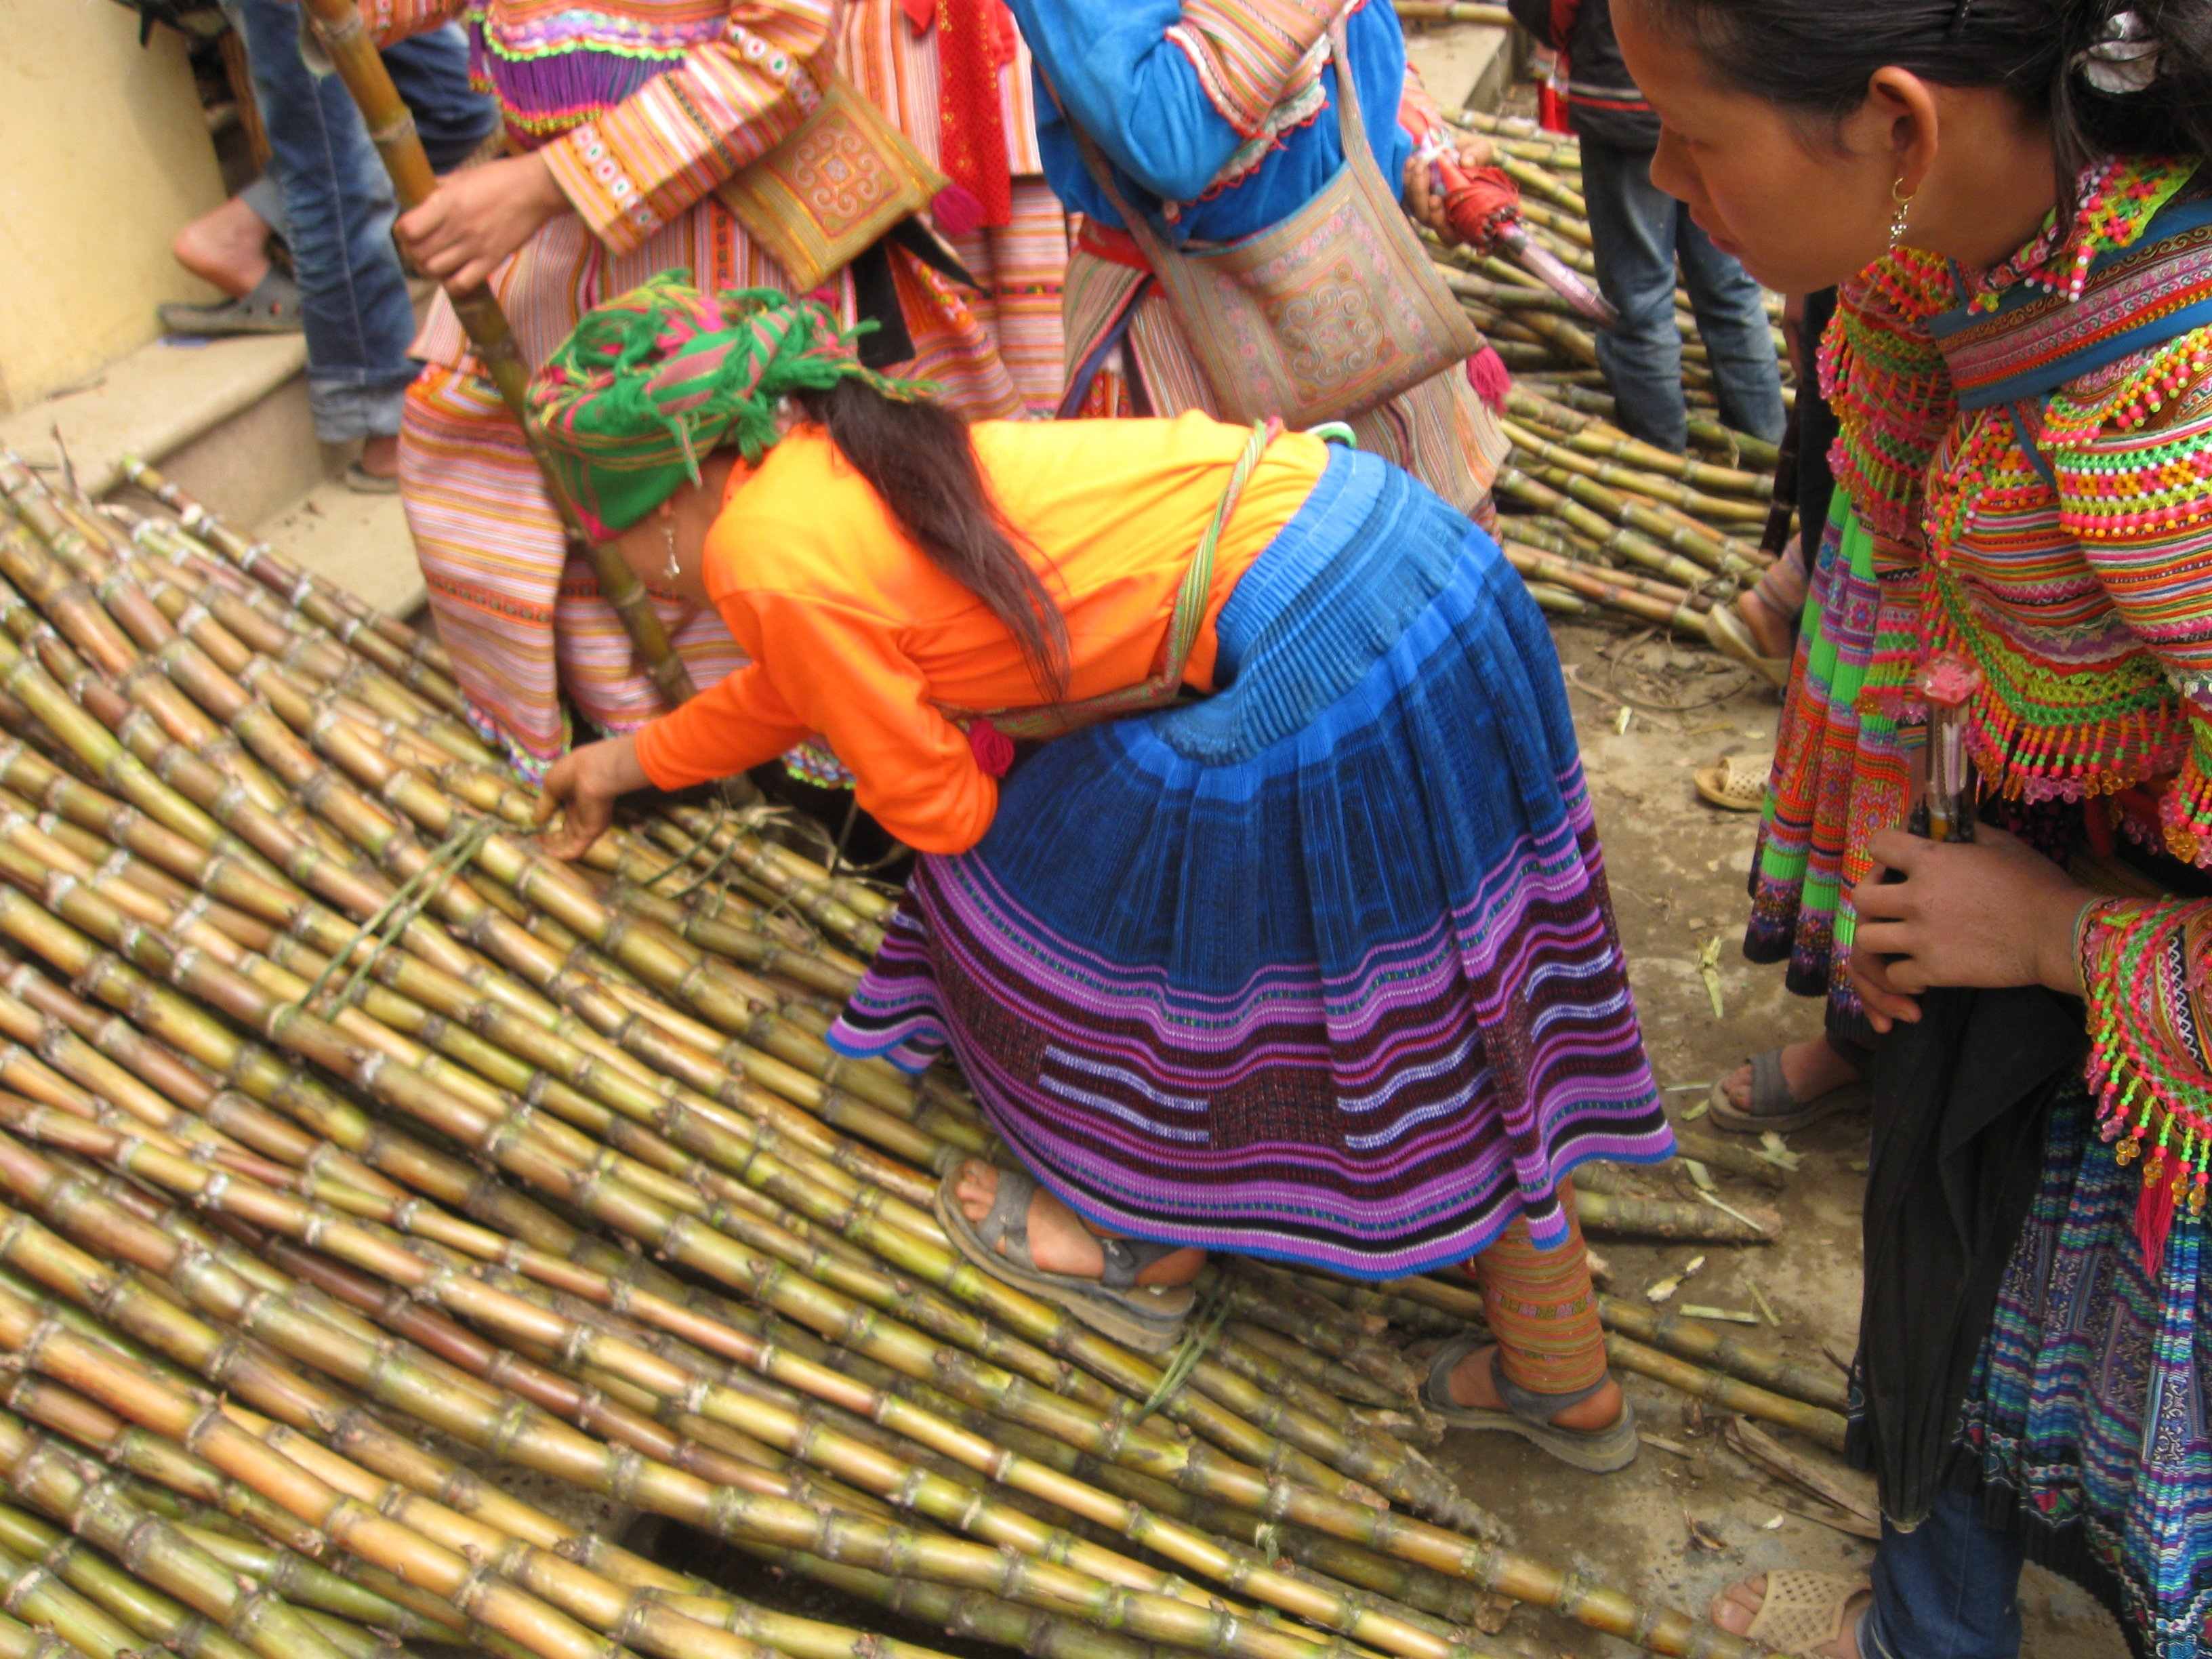 Sugar cane seller at Bac Ha market, Vietnam